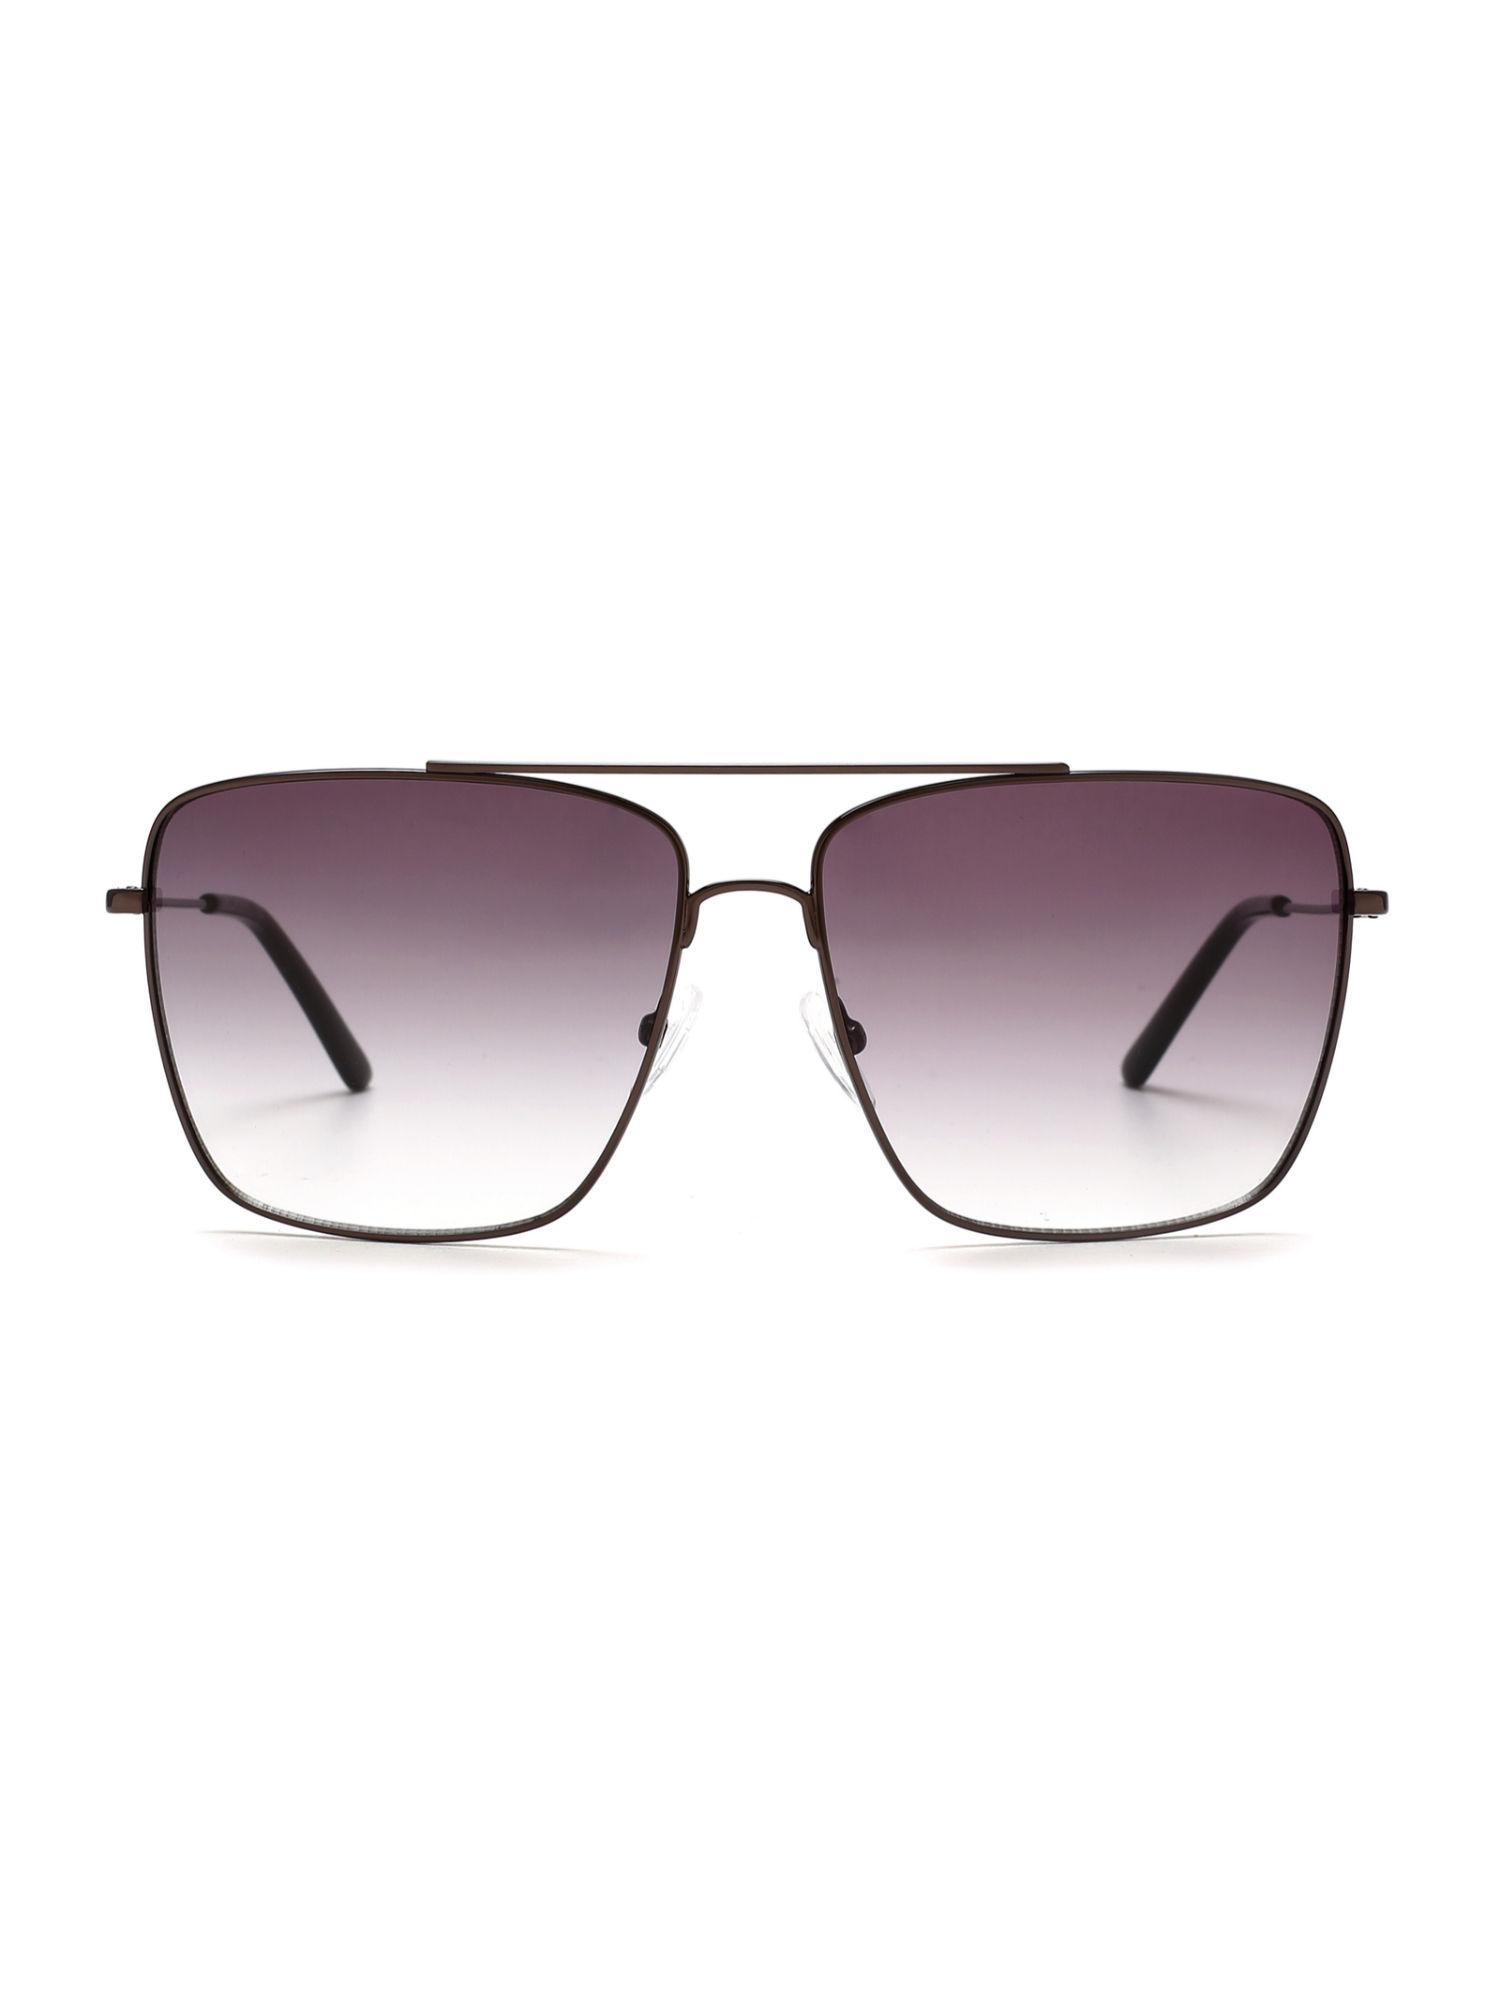 navigator-sunglasses-with-purple-lens-for-men